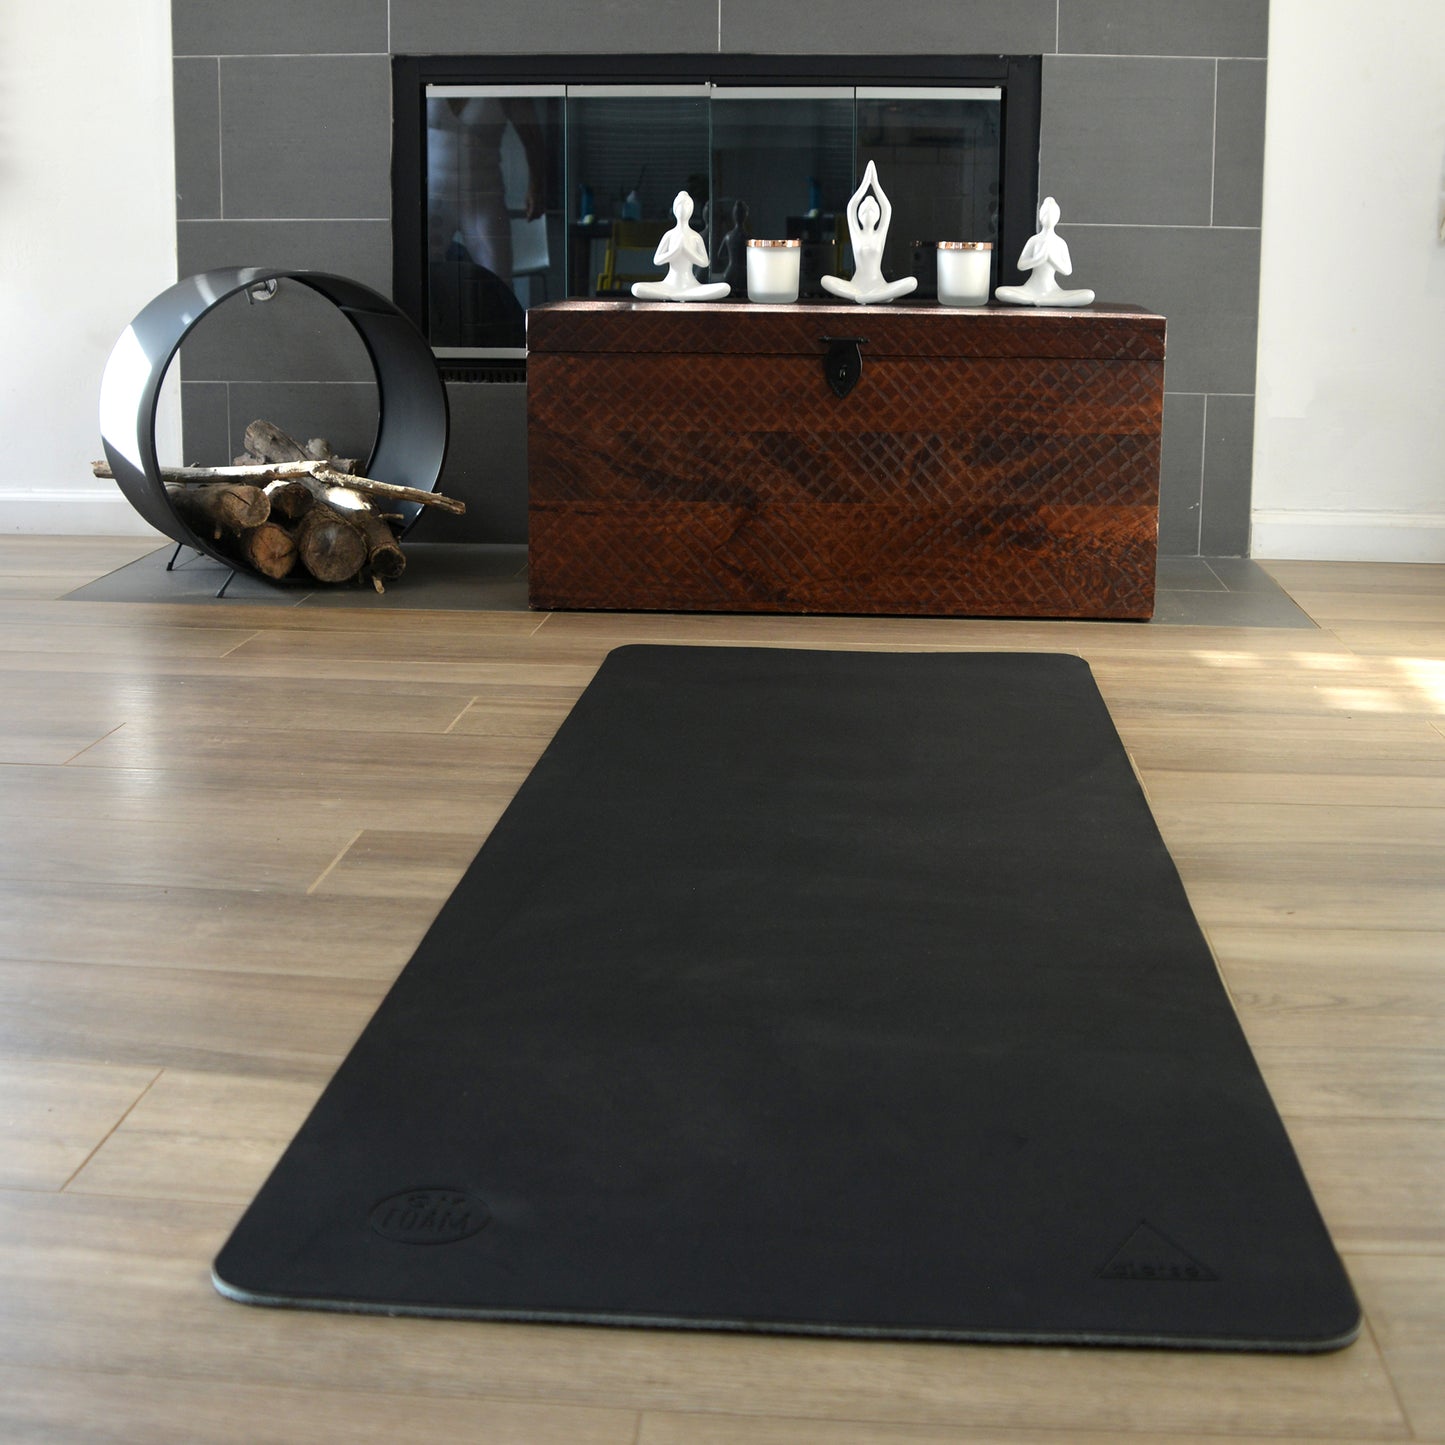 alerse THICK Yoga Mat - Premium 8mm thick - Midnight (Black)